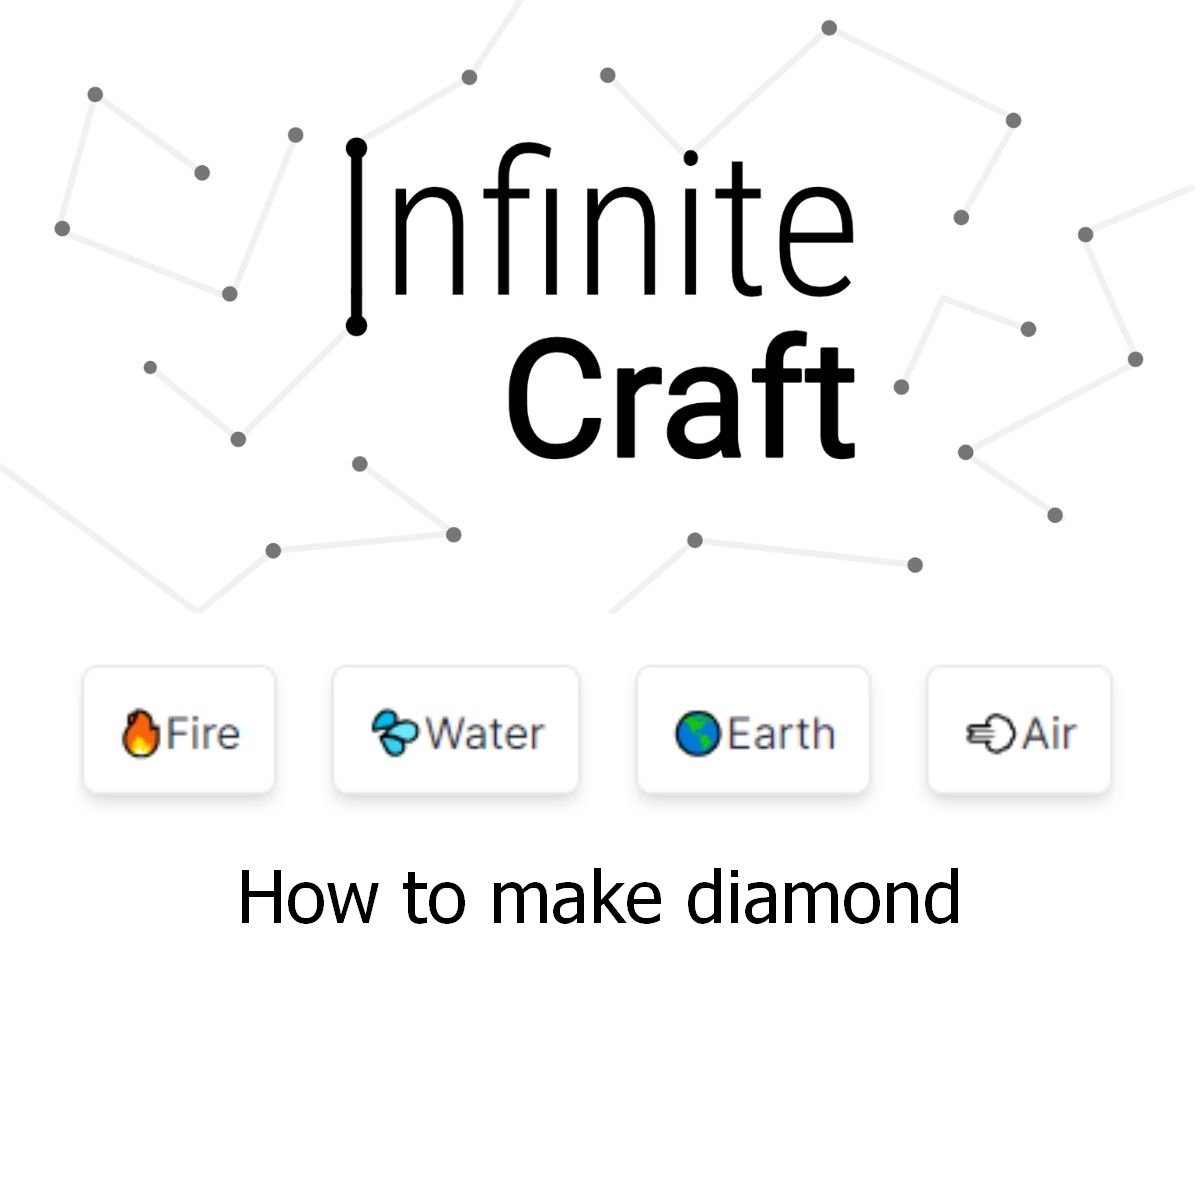 how to make diamond in infinite craft